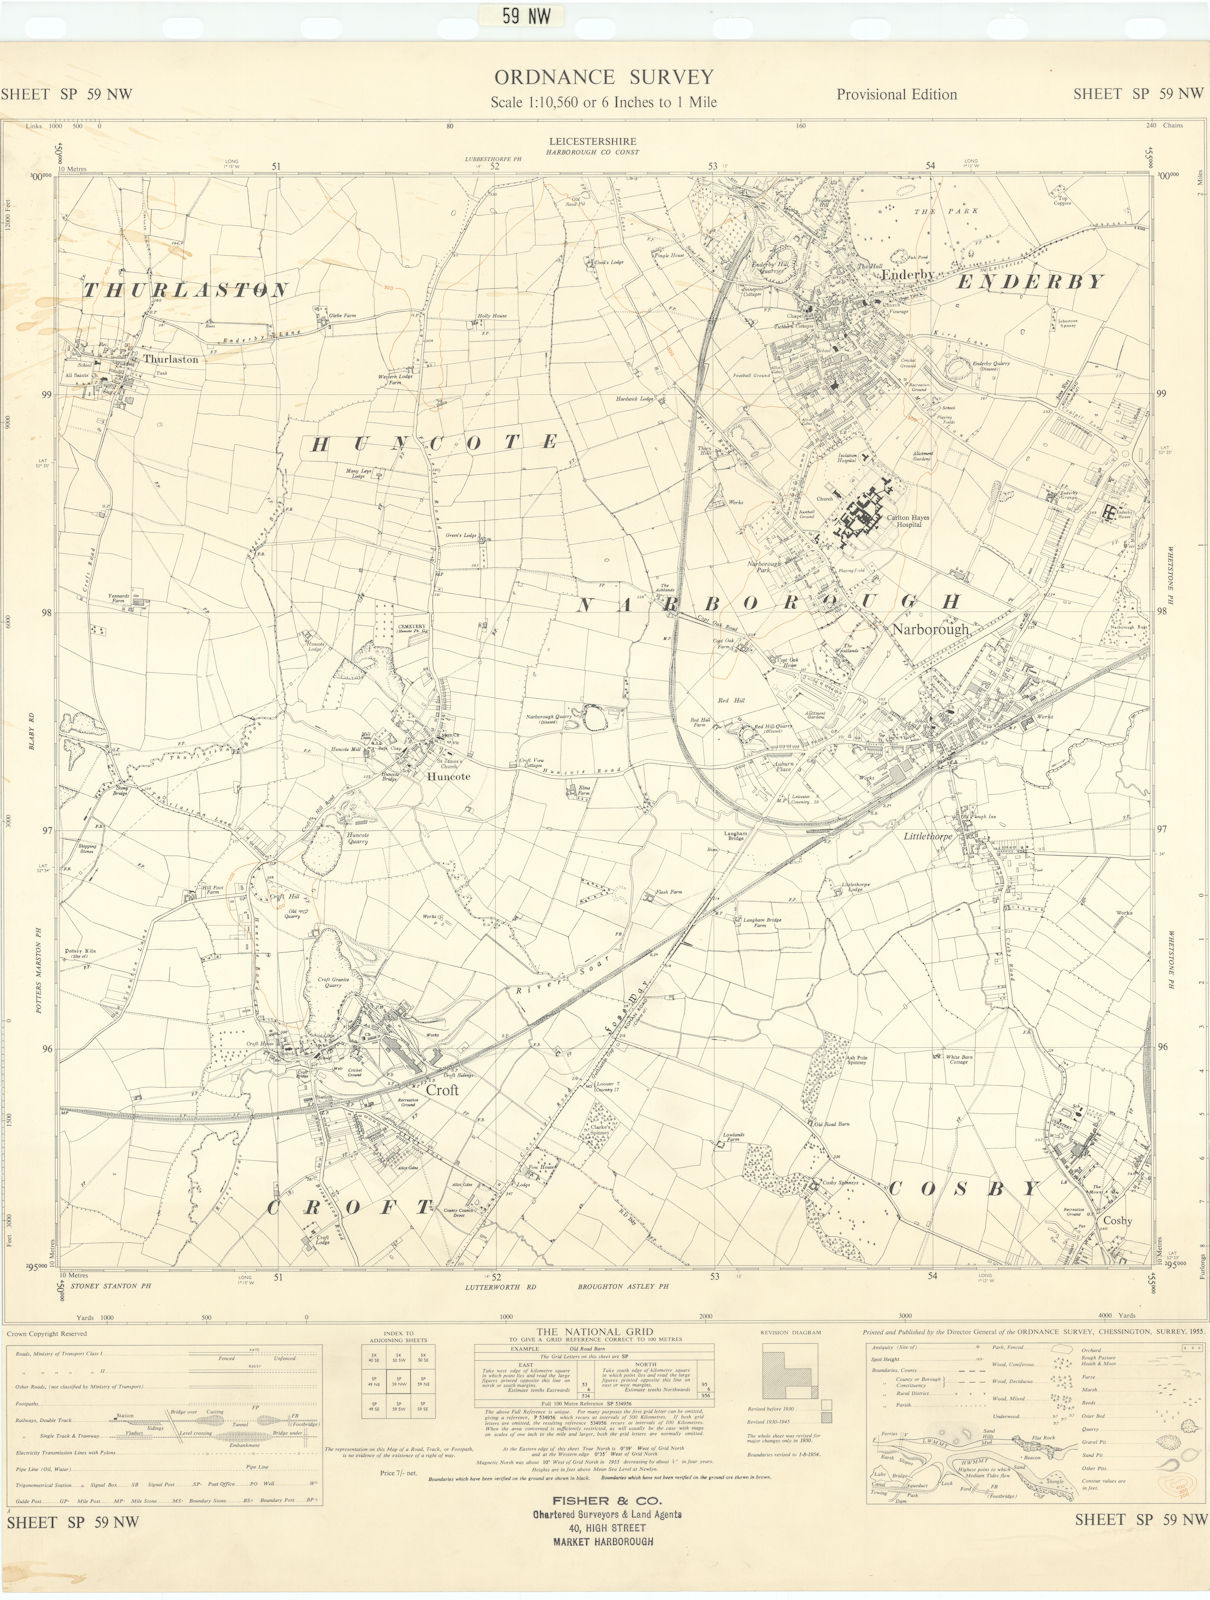 Ordnance Survey SP59NW Leics Enderby Narborrough Croft Thurlaston Cosby 1955 map